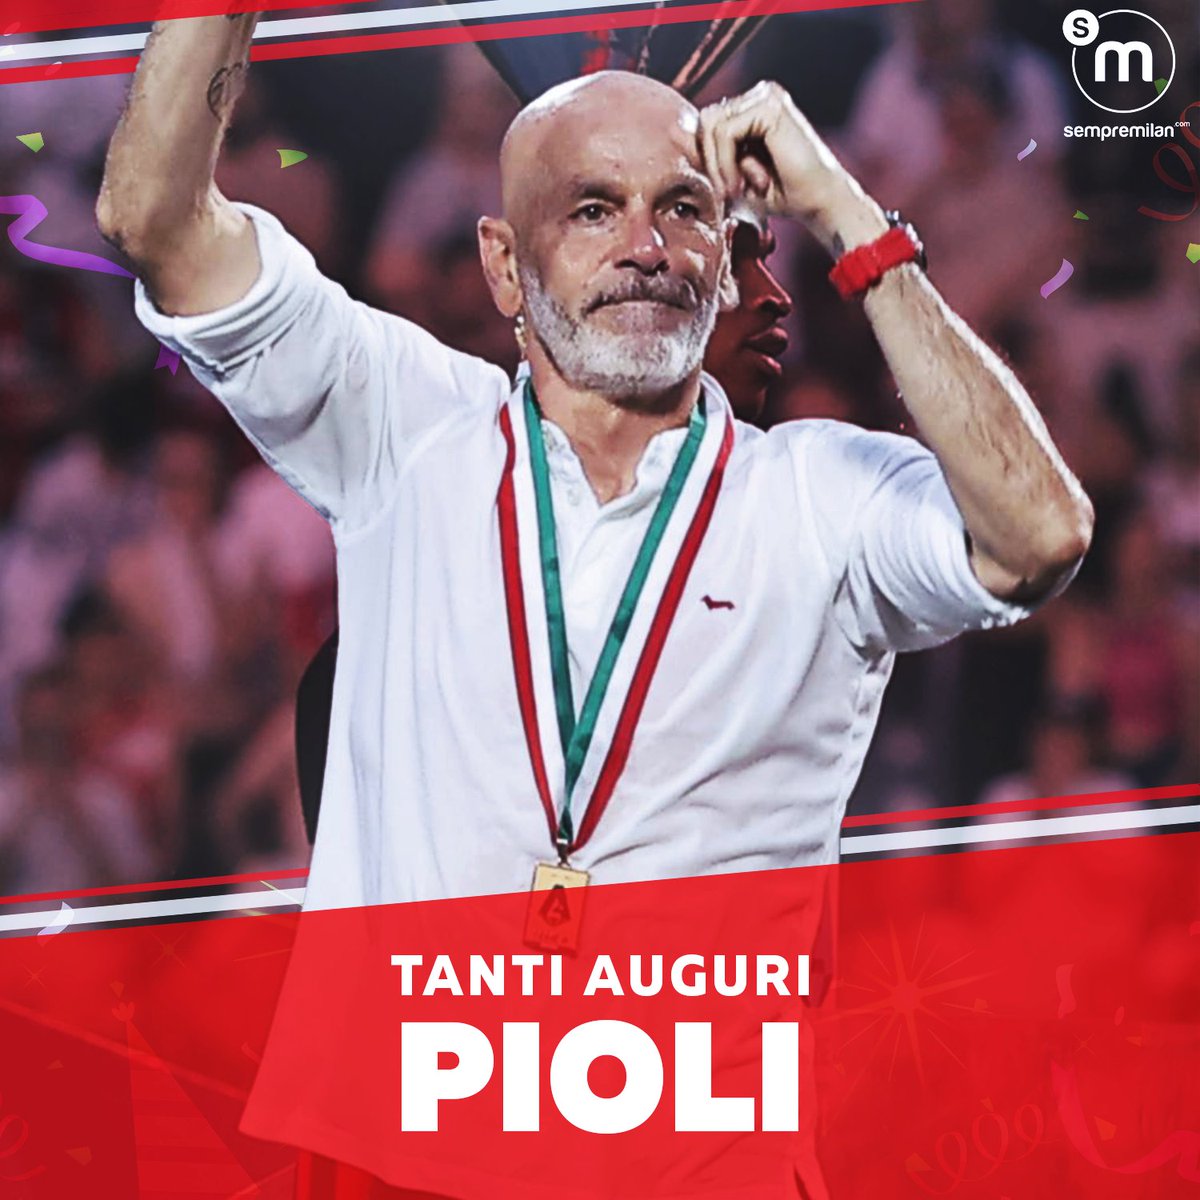 🎂 Happy birthday to Stefano Pioli! 🎉 The #ACMilan head coach turns 57 today... 🇮🇹 #AuguriBoss 🔴⚫